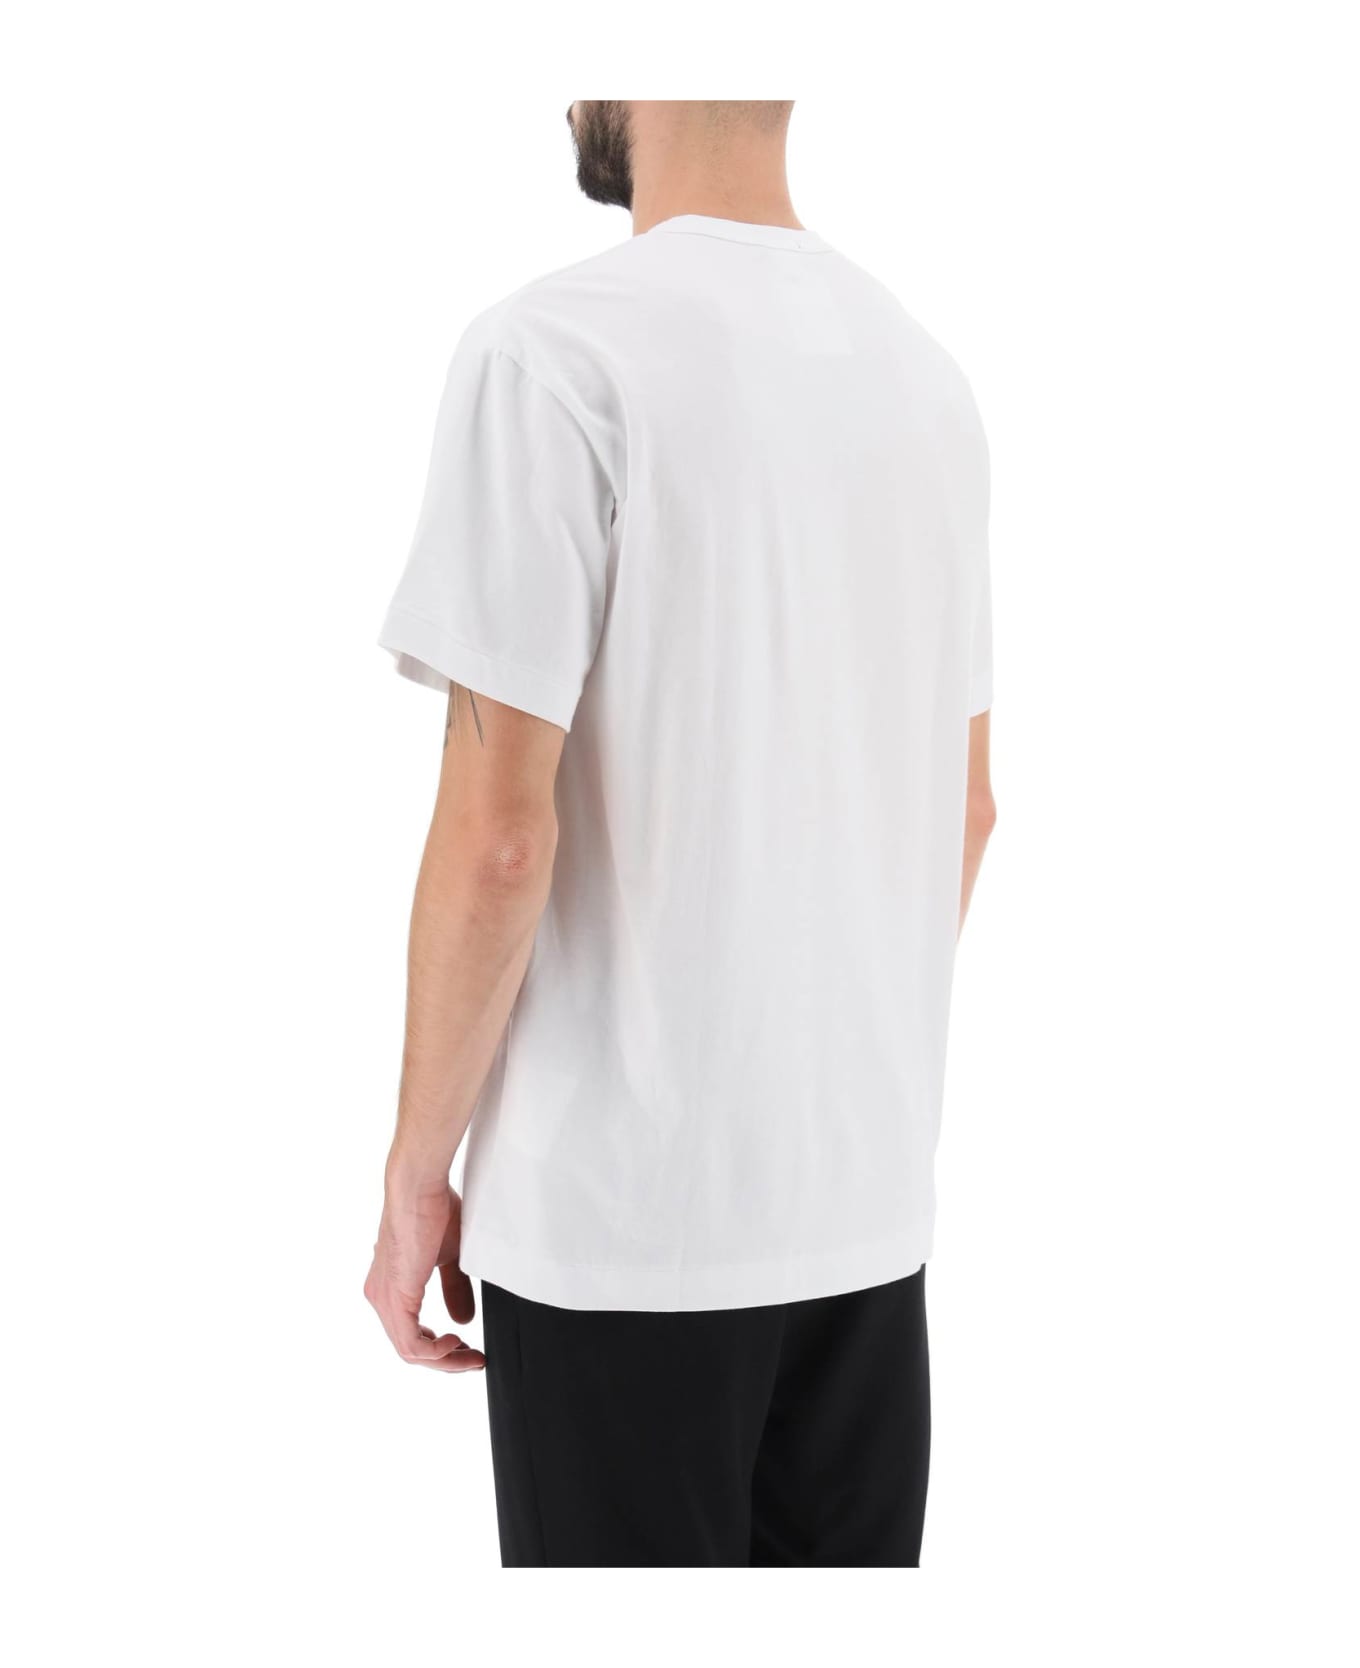 Comme Des Garçons Homme Plus Artwork Print T-shirt - WHITE BLACK (White)